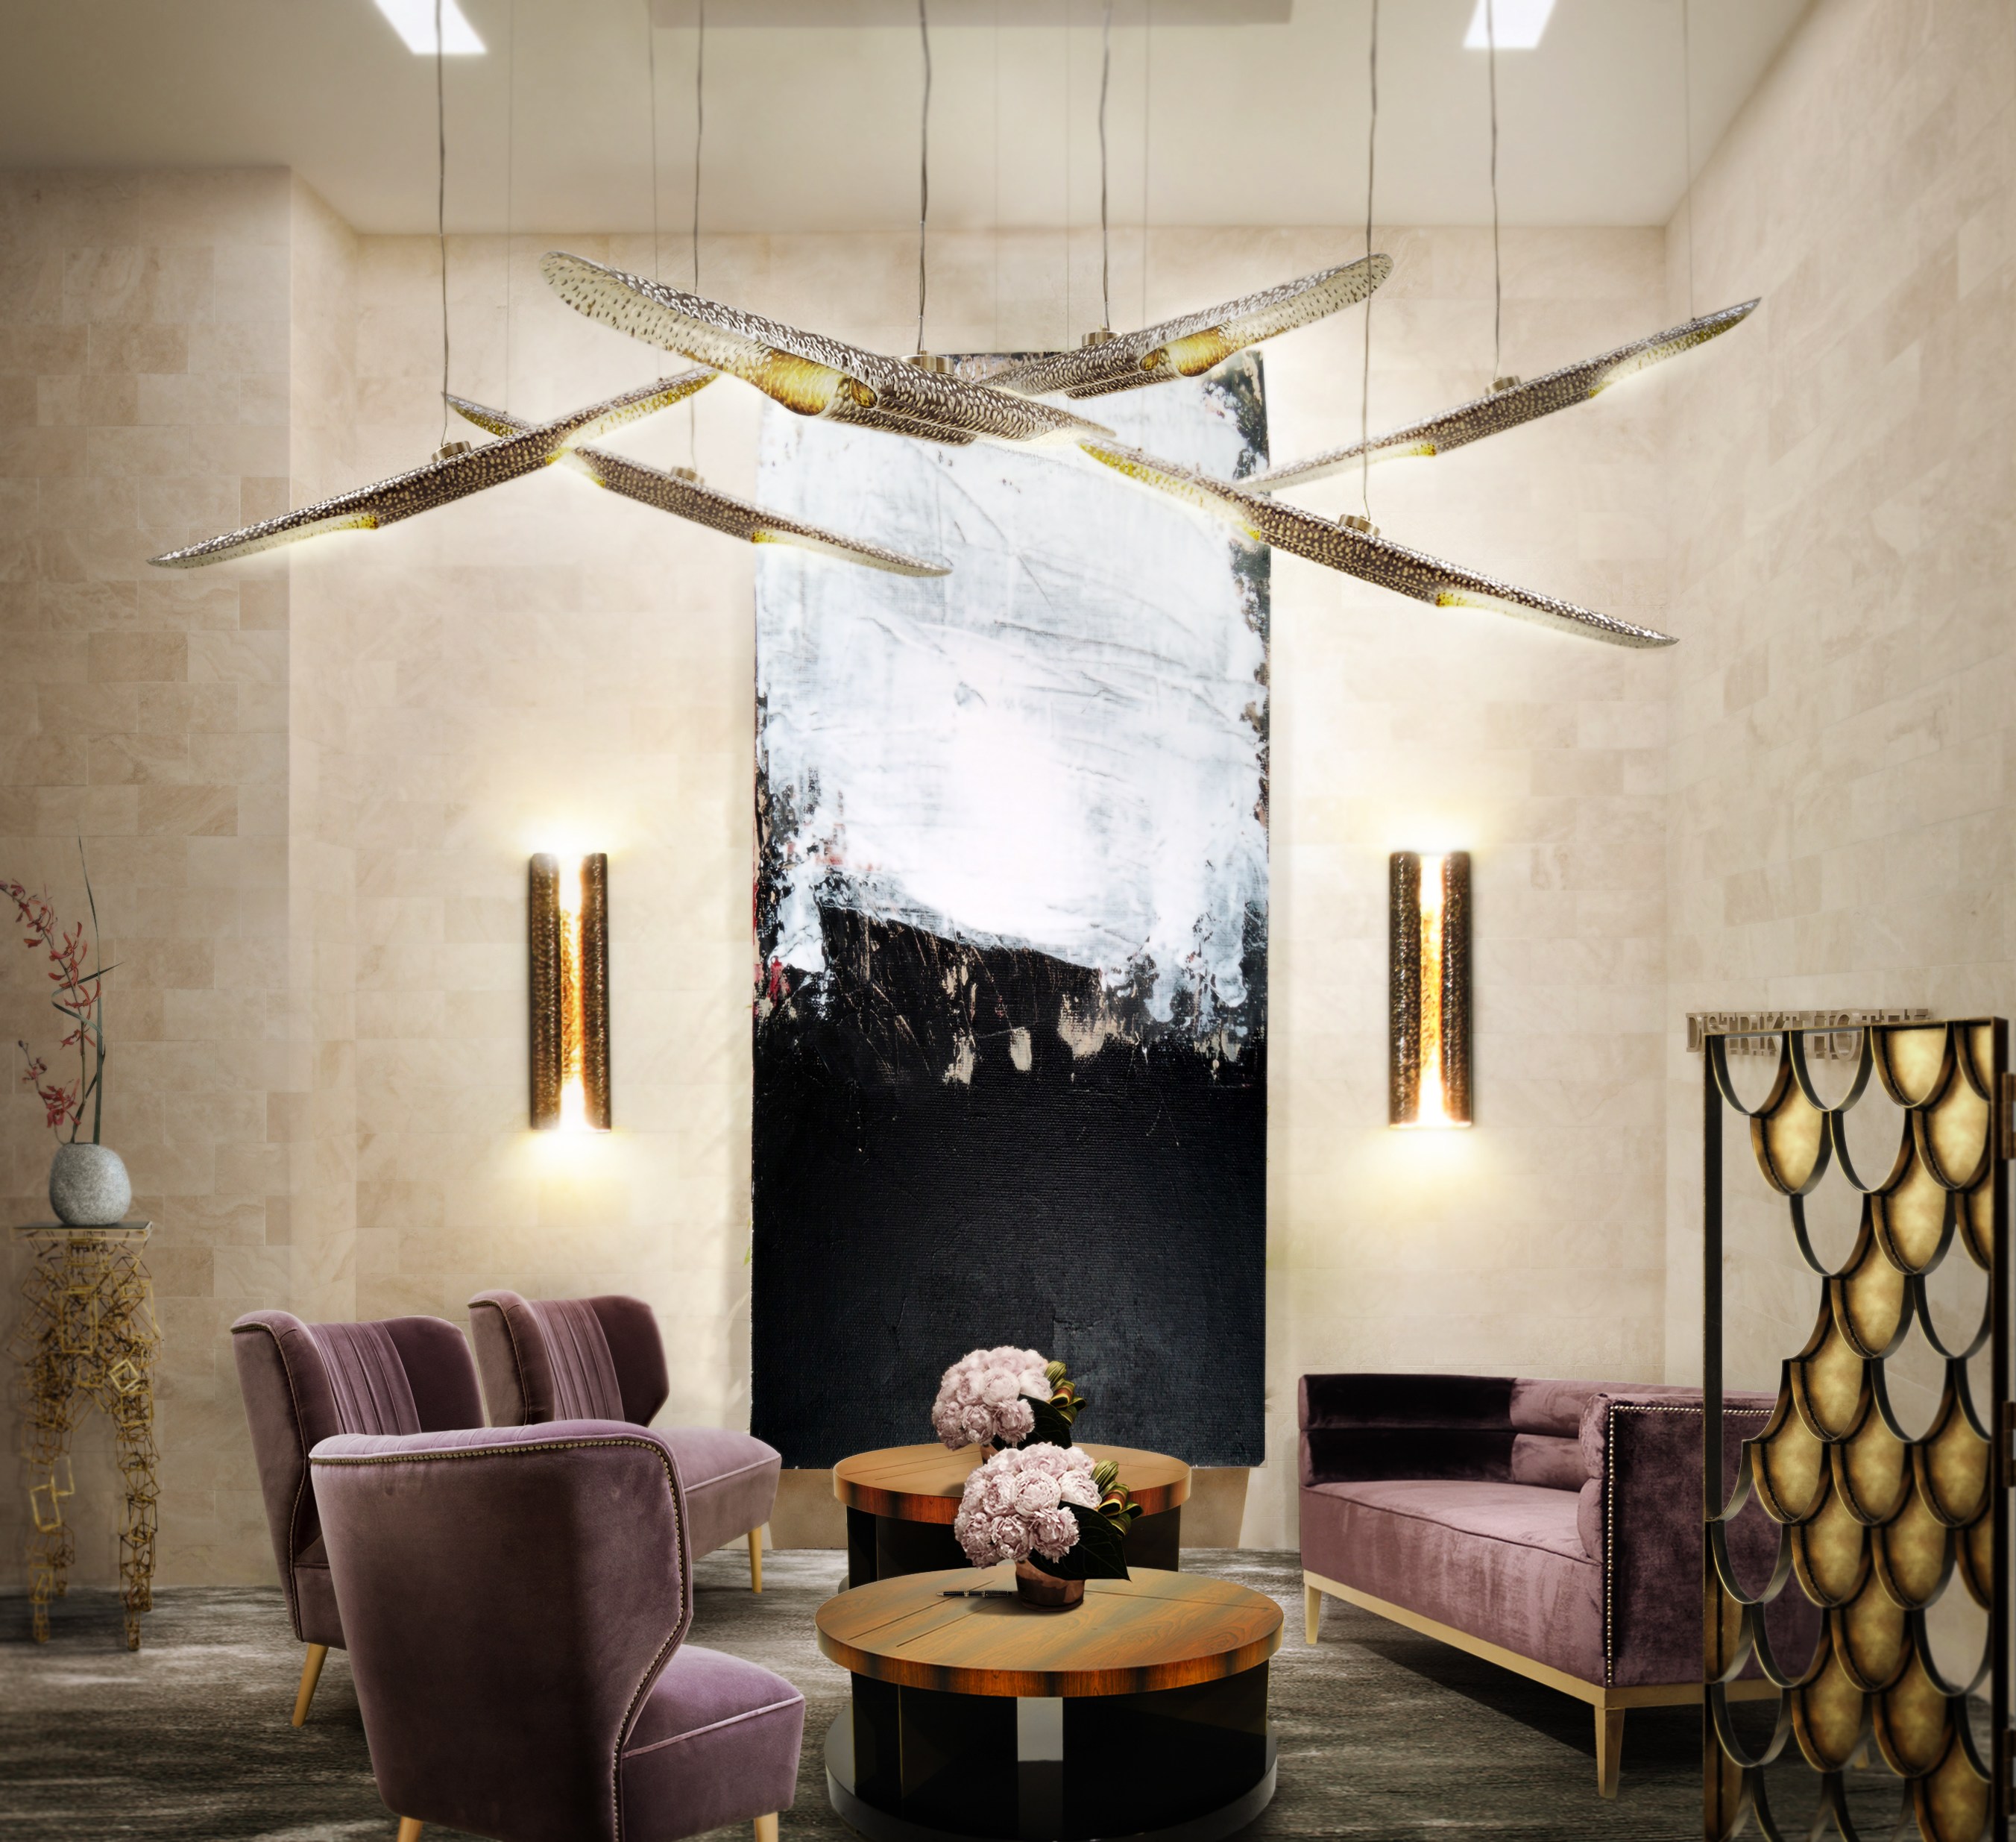 Brabbu-paris design agenda-maison objet-paris-2015-furniture-home design-decoration2